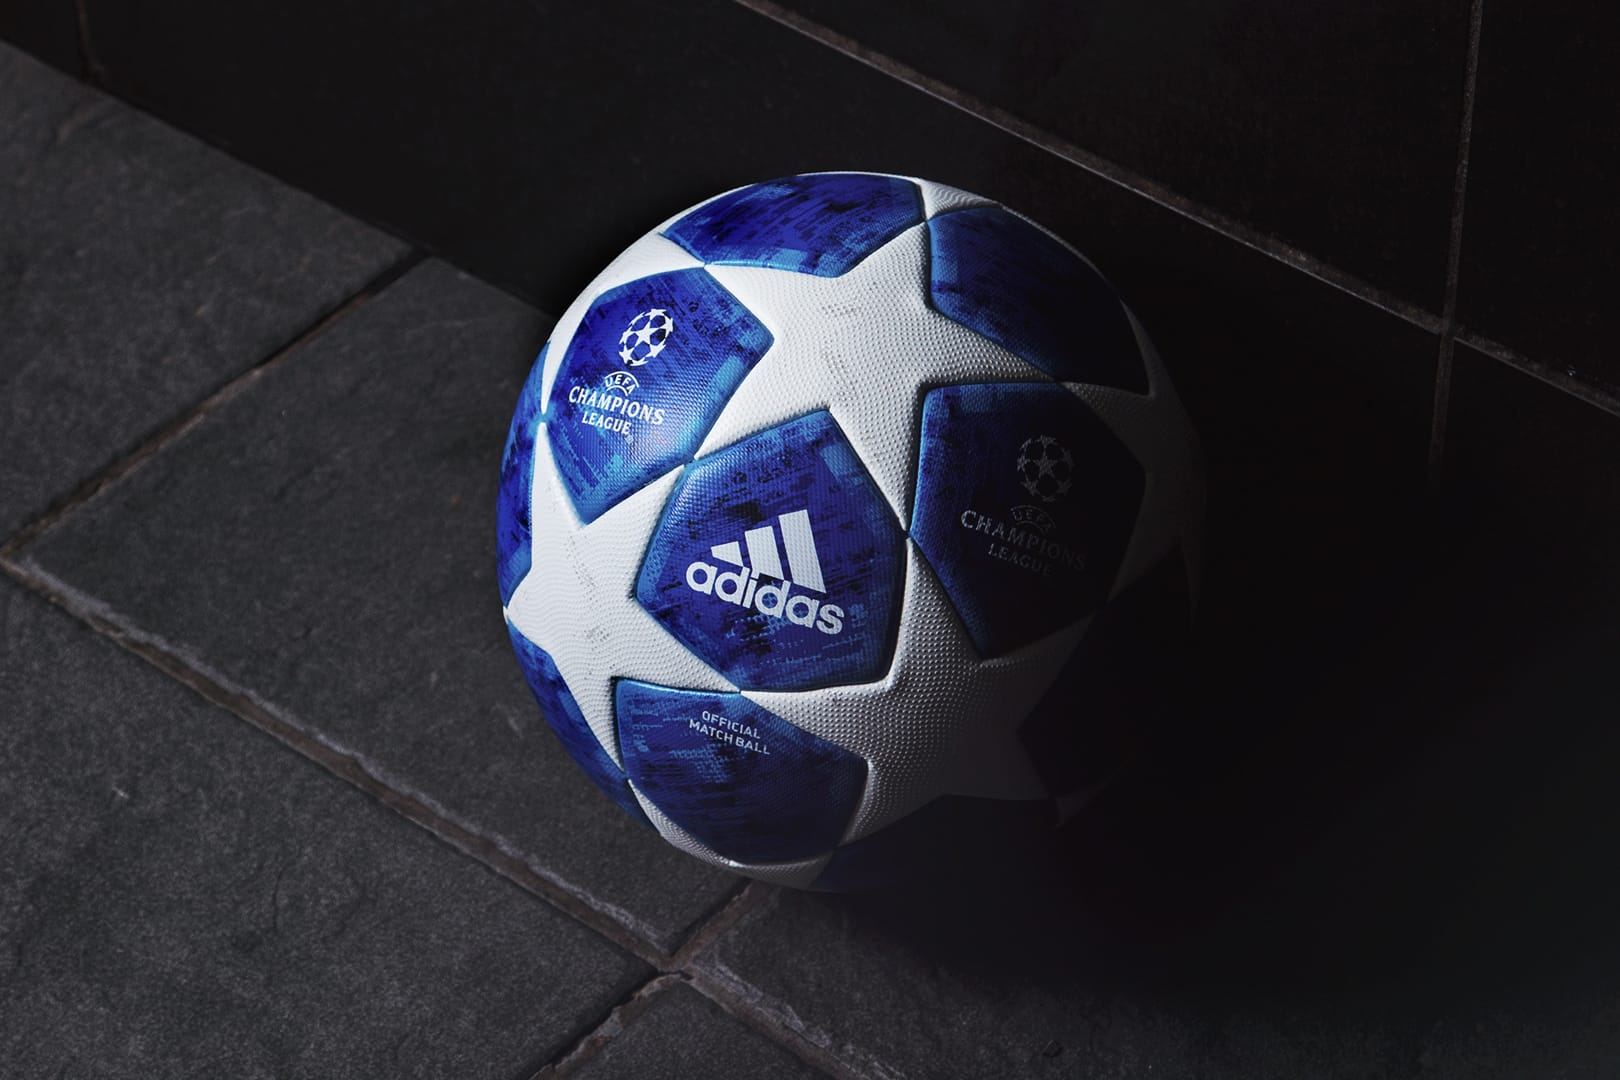 2019 uefa champions league ball